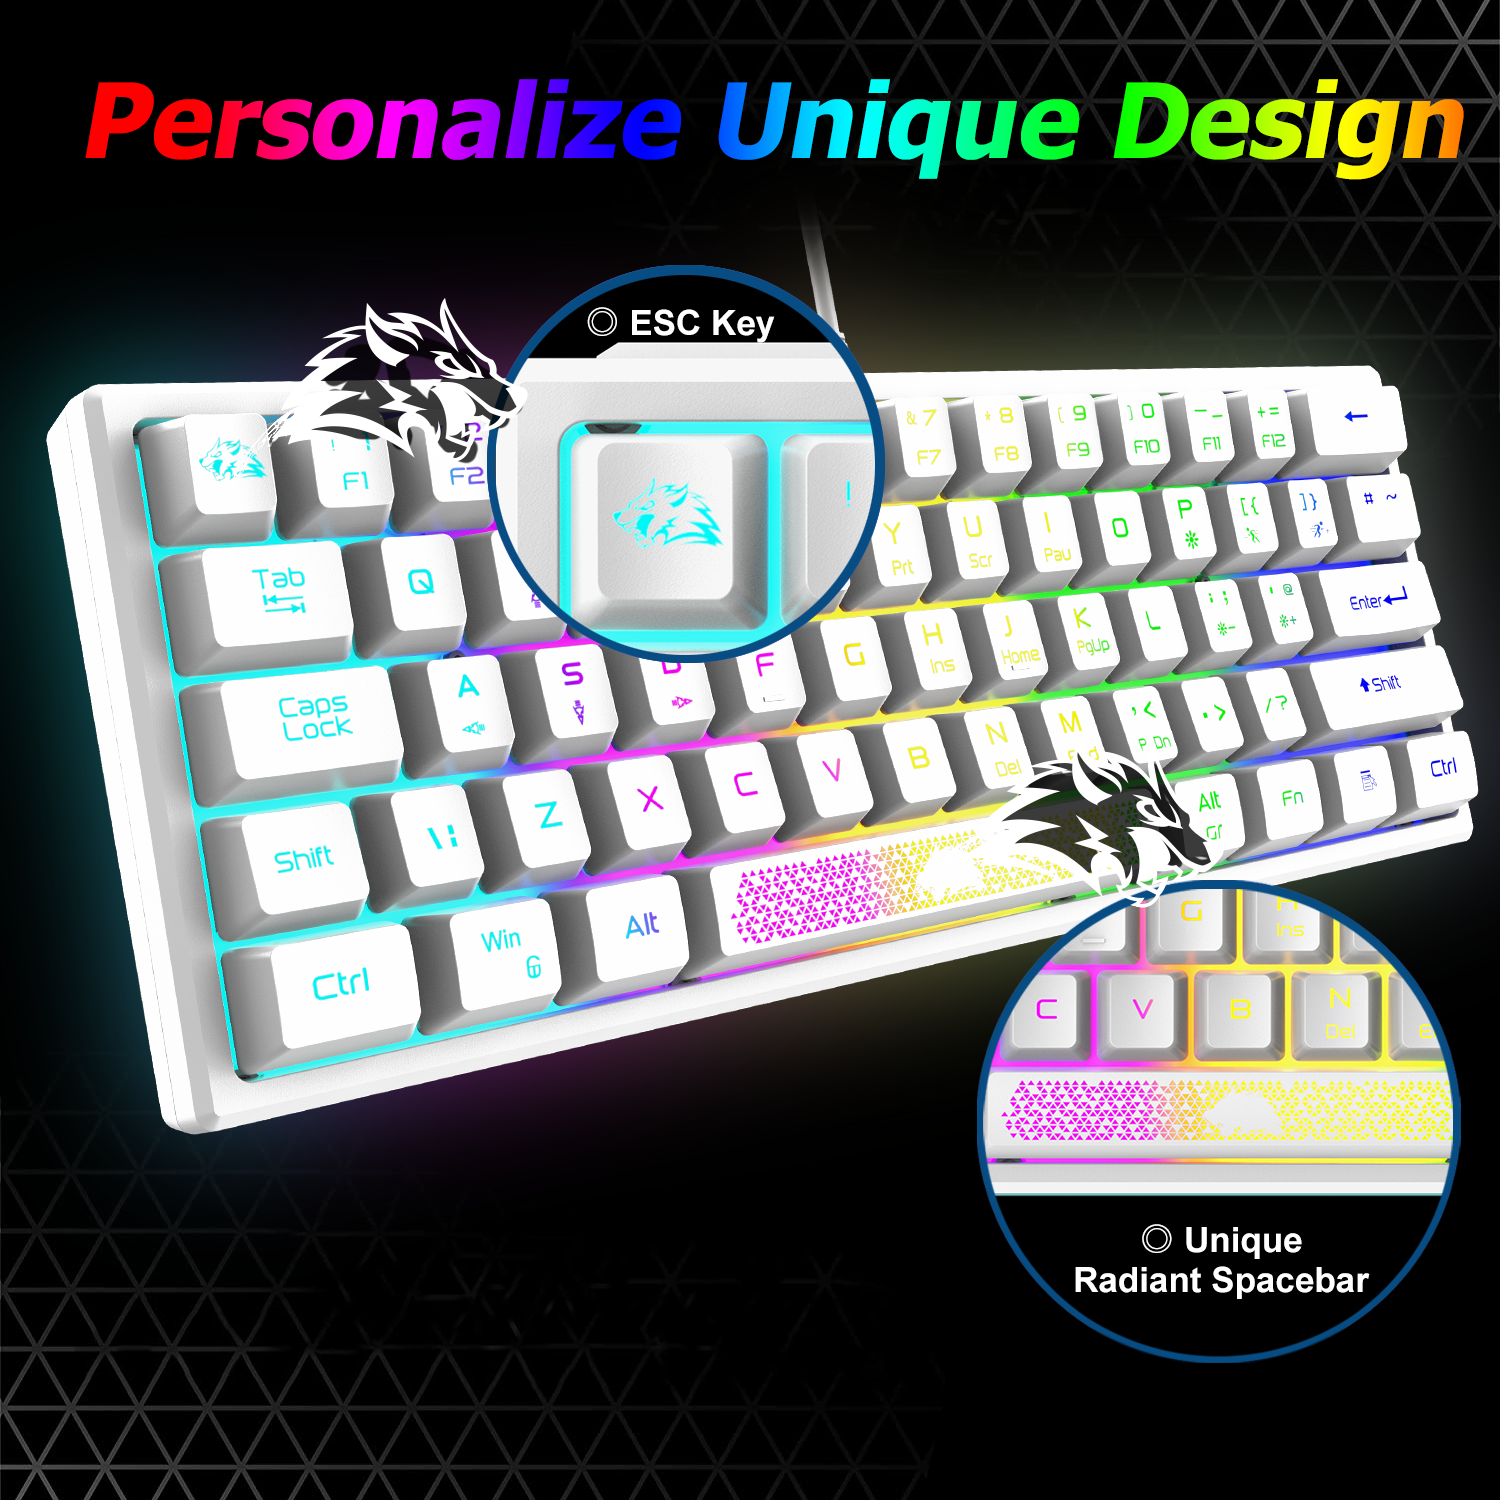 ZIYOU LANG K61 - 60% Compact Gaming Keyboard and Mouse Set UK Layout Ultralight 12000 DPI Breathable LED Honeycomb Shell Mouse